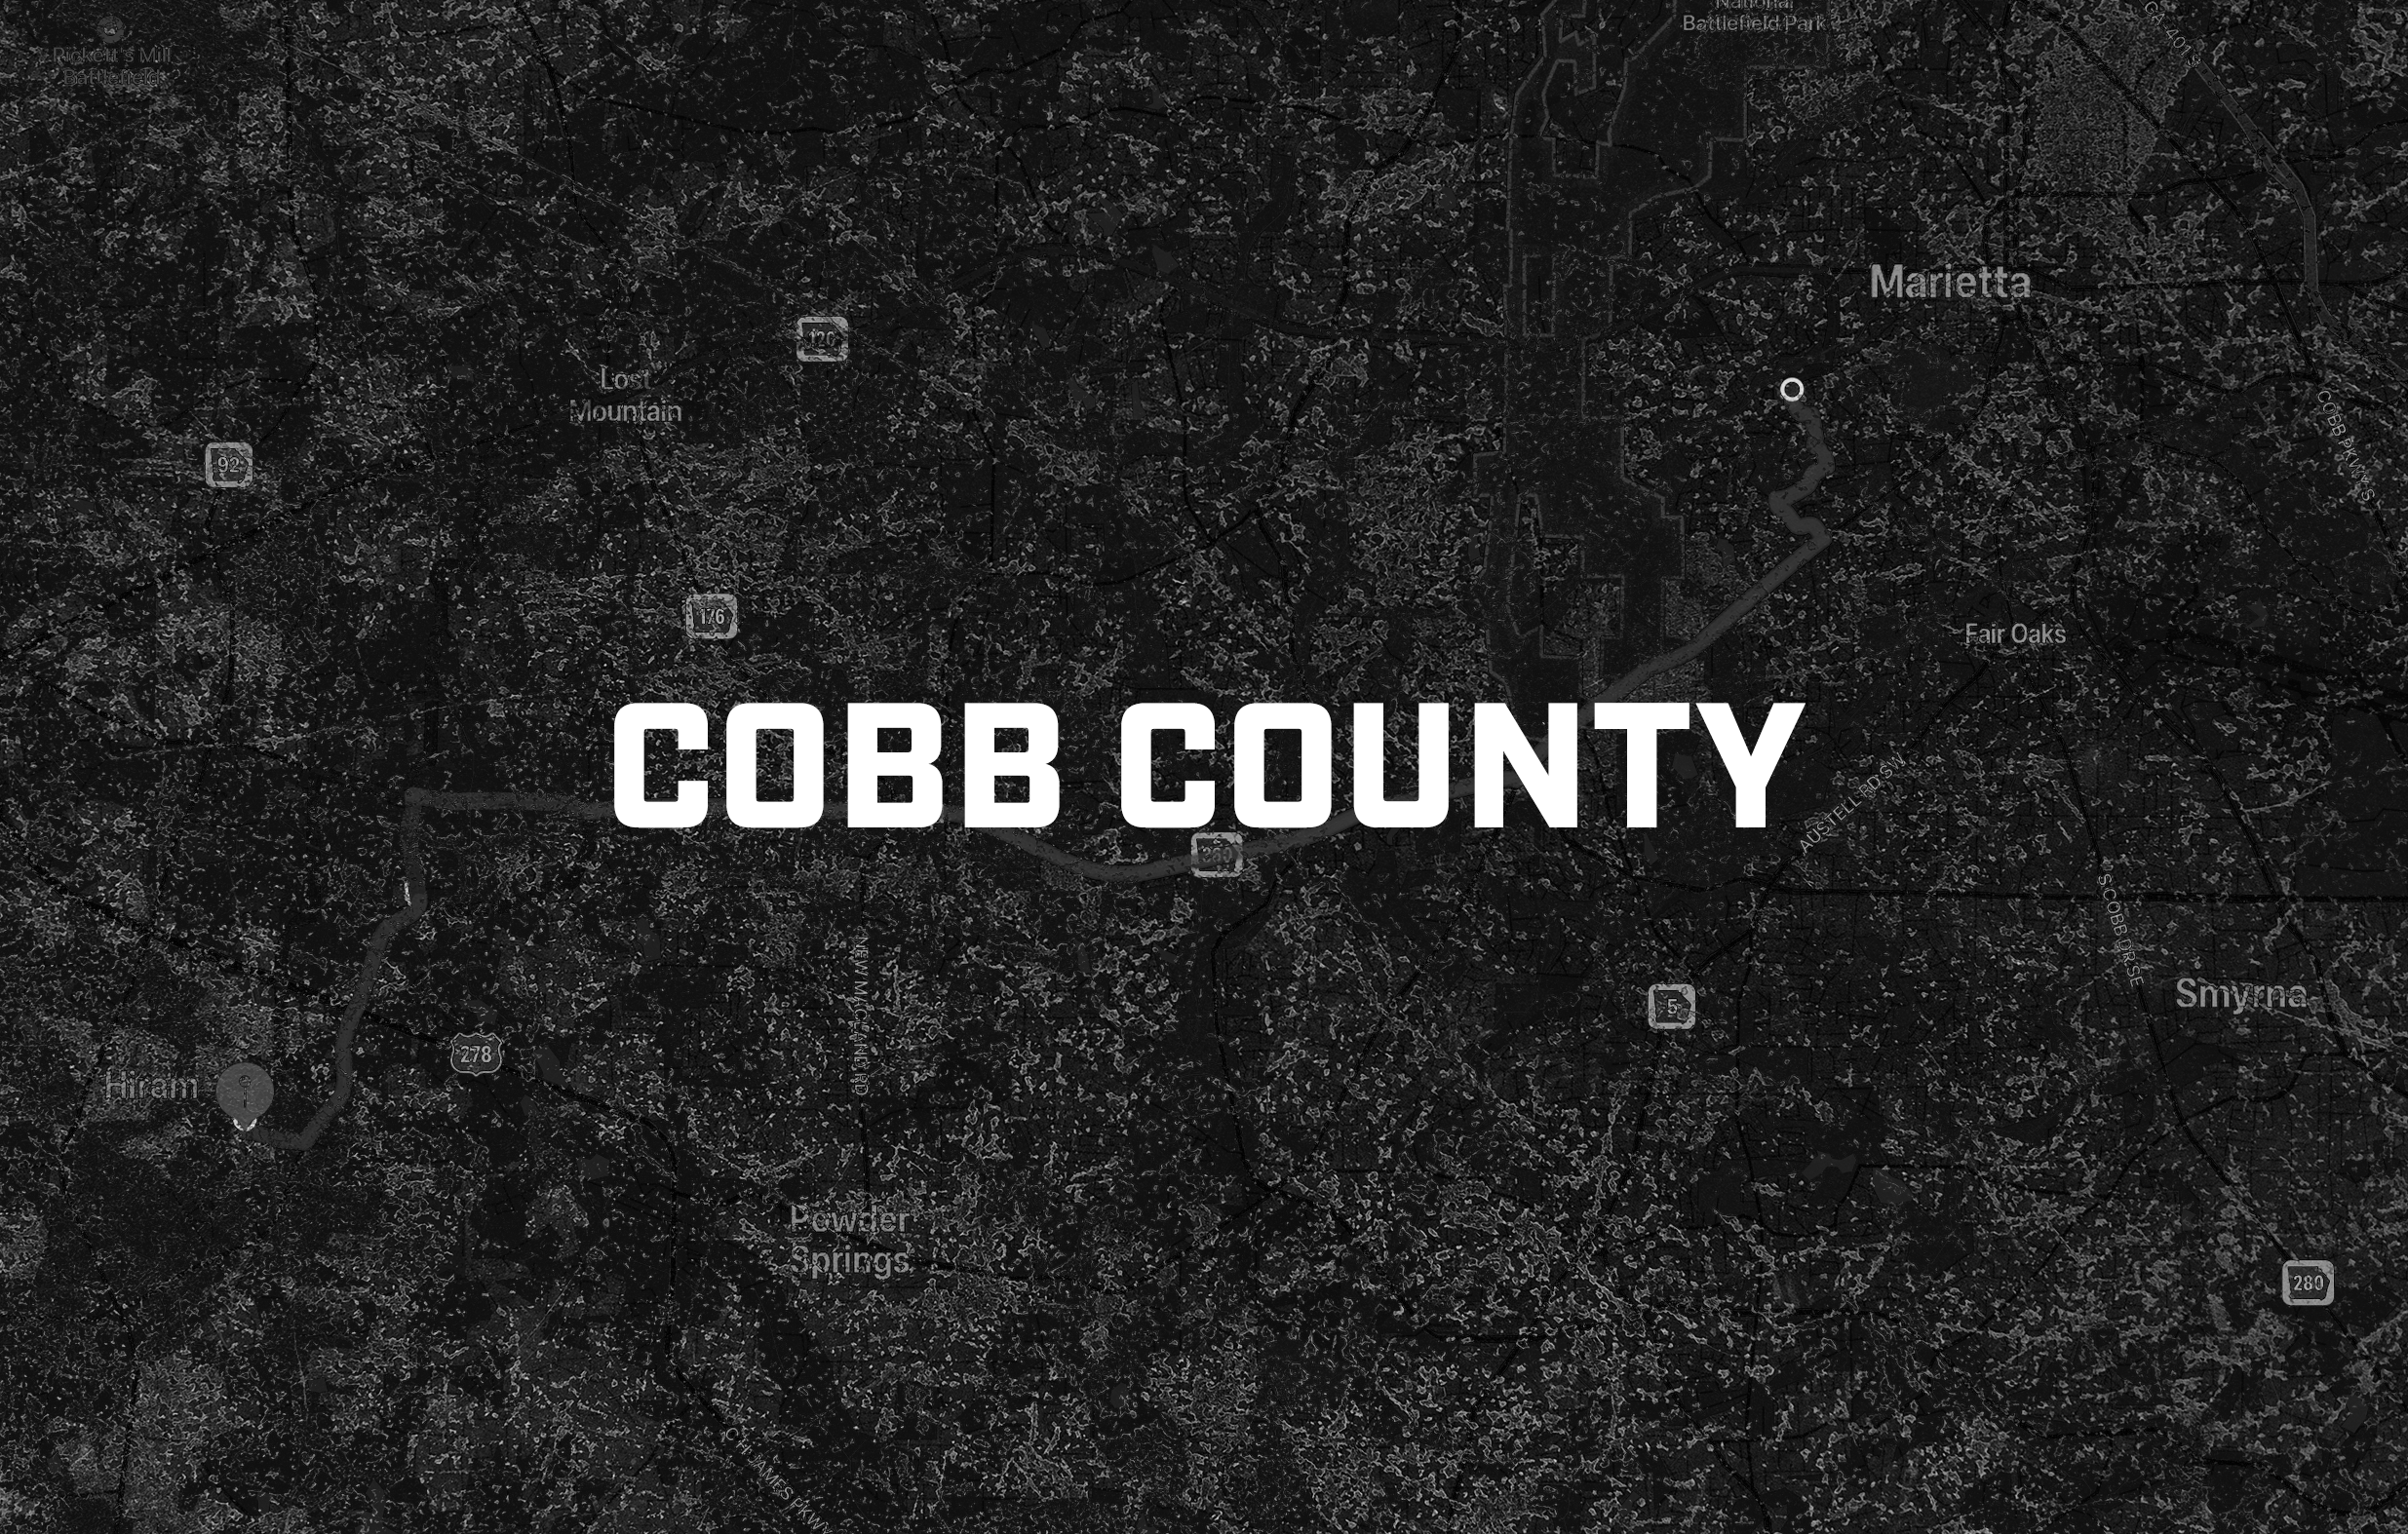 COBB COUNTY